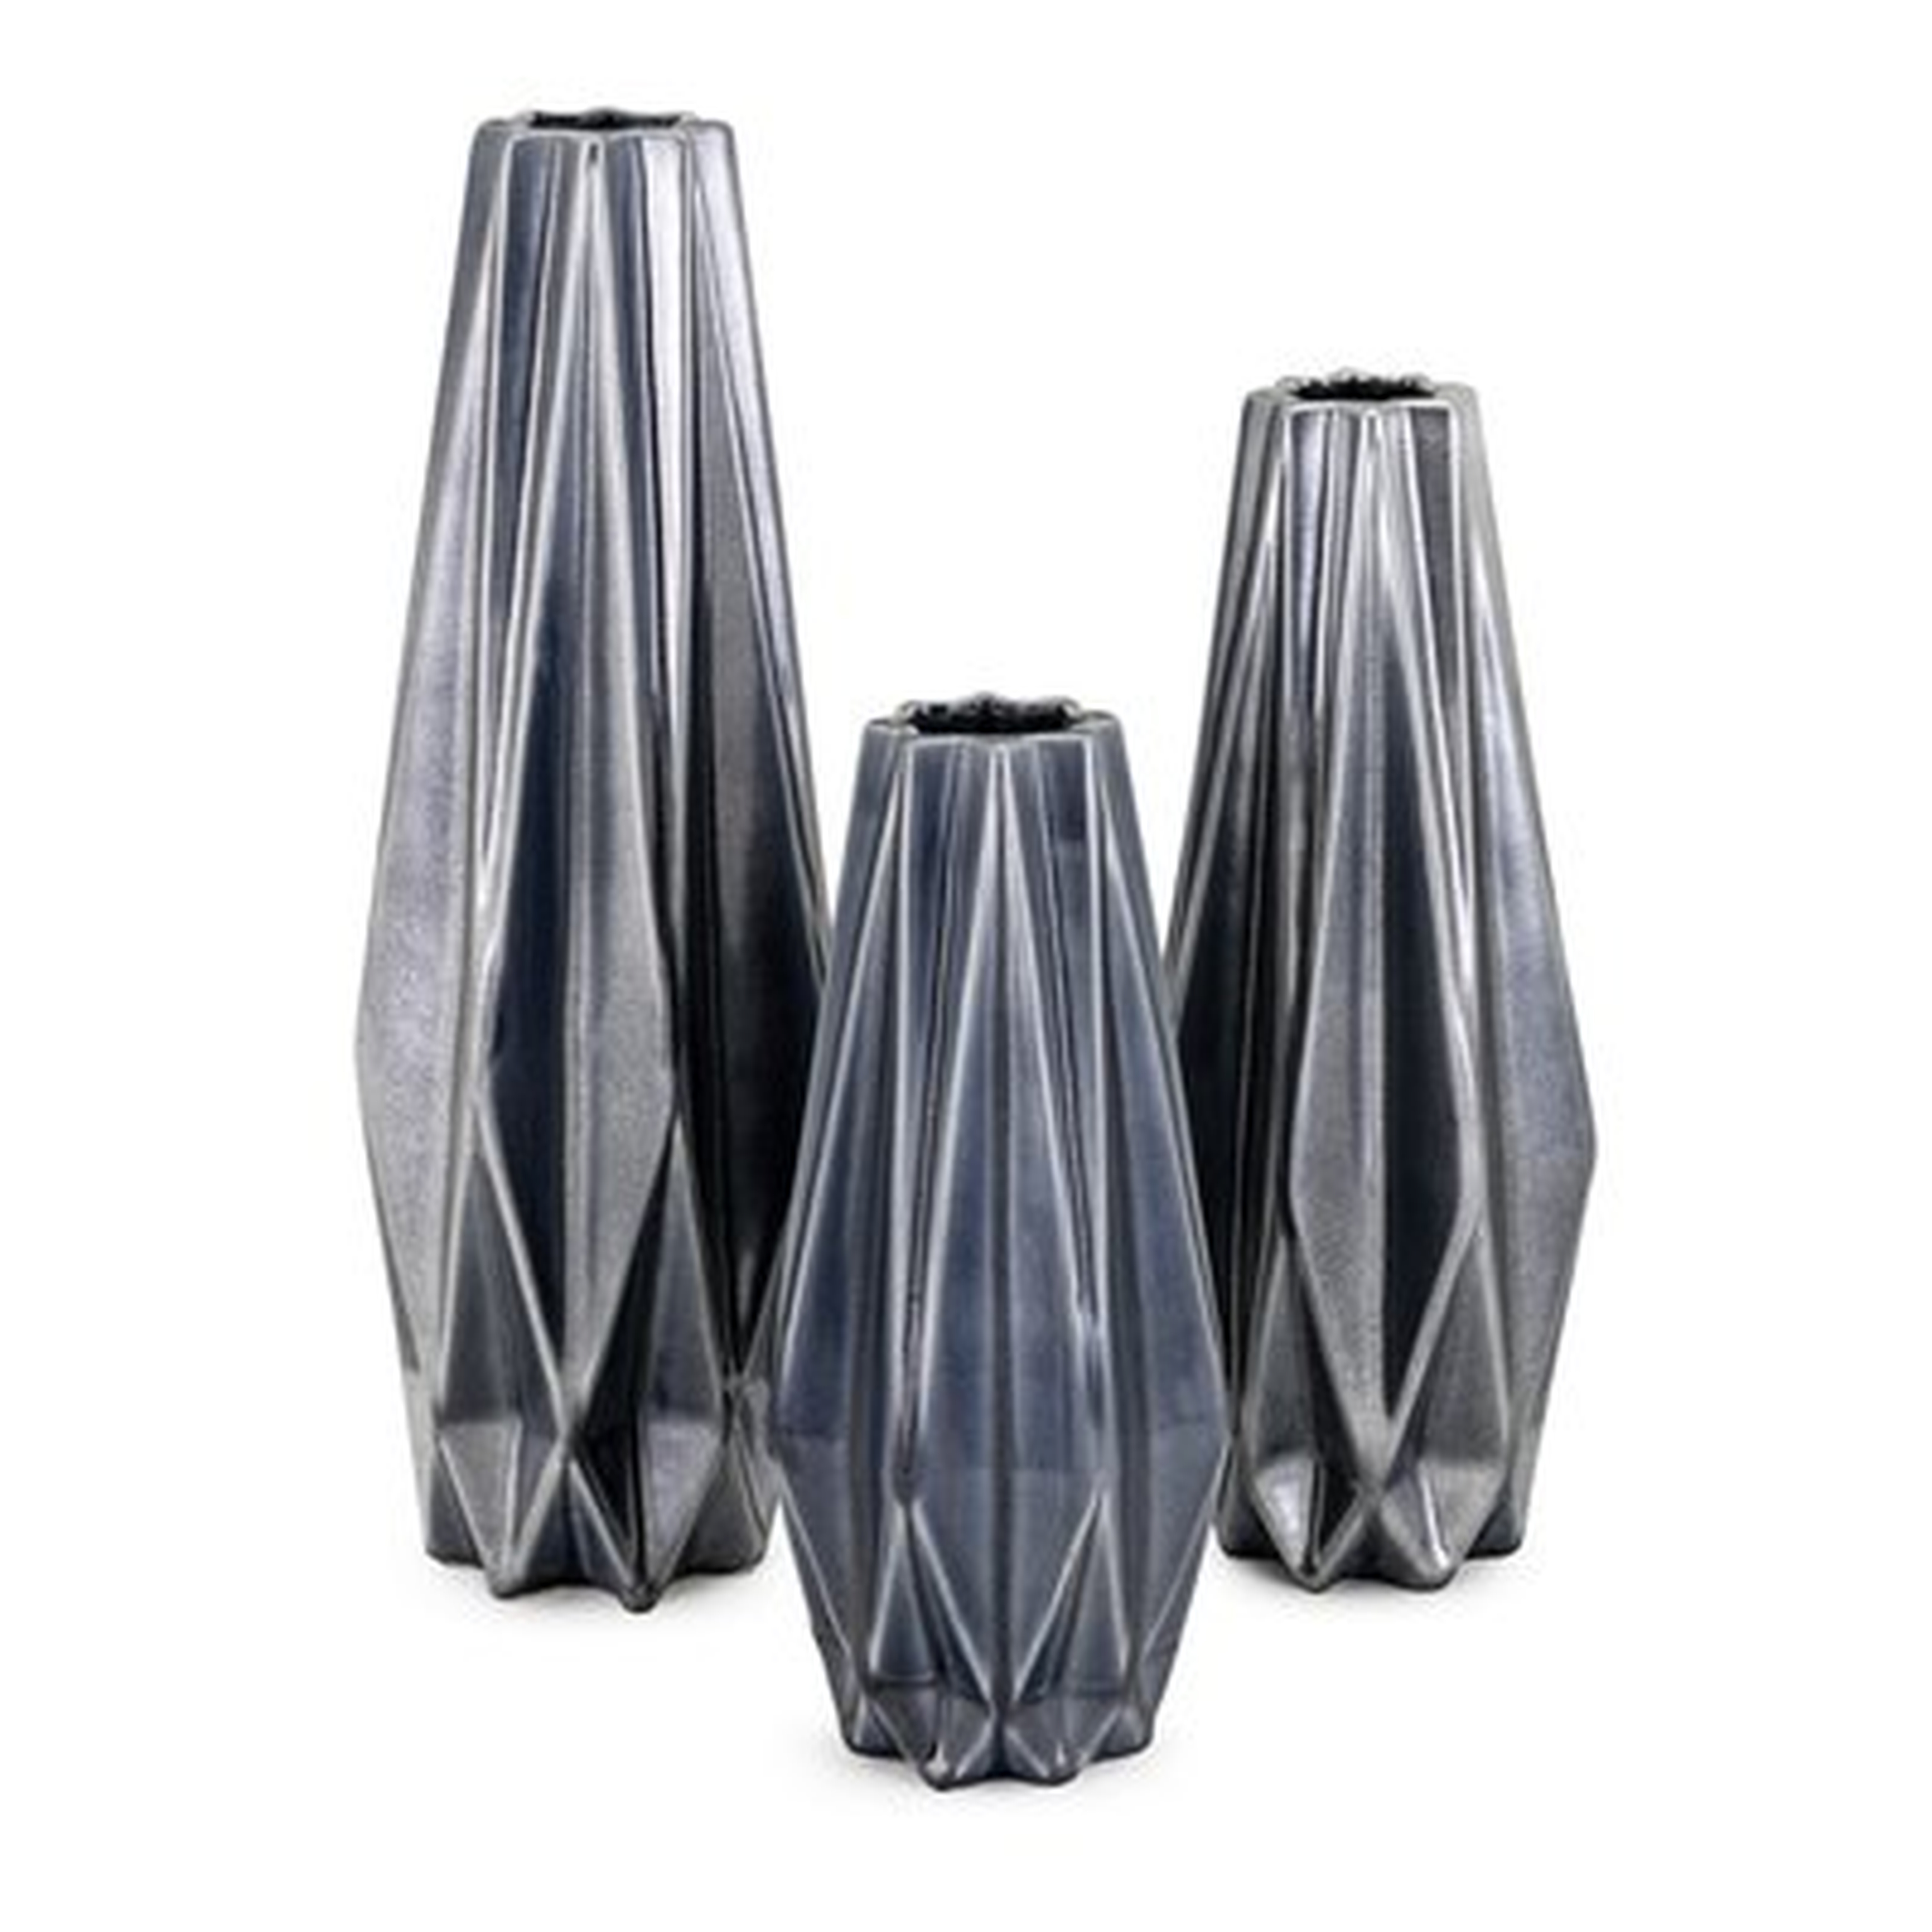 Encina Metallic 3 Piece Table Vase Set of 3 - Wayfair